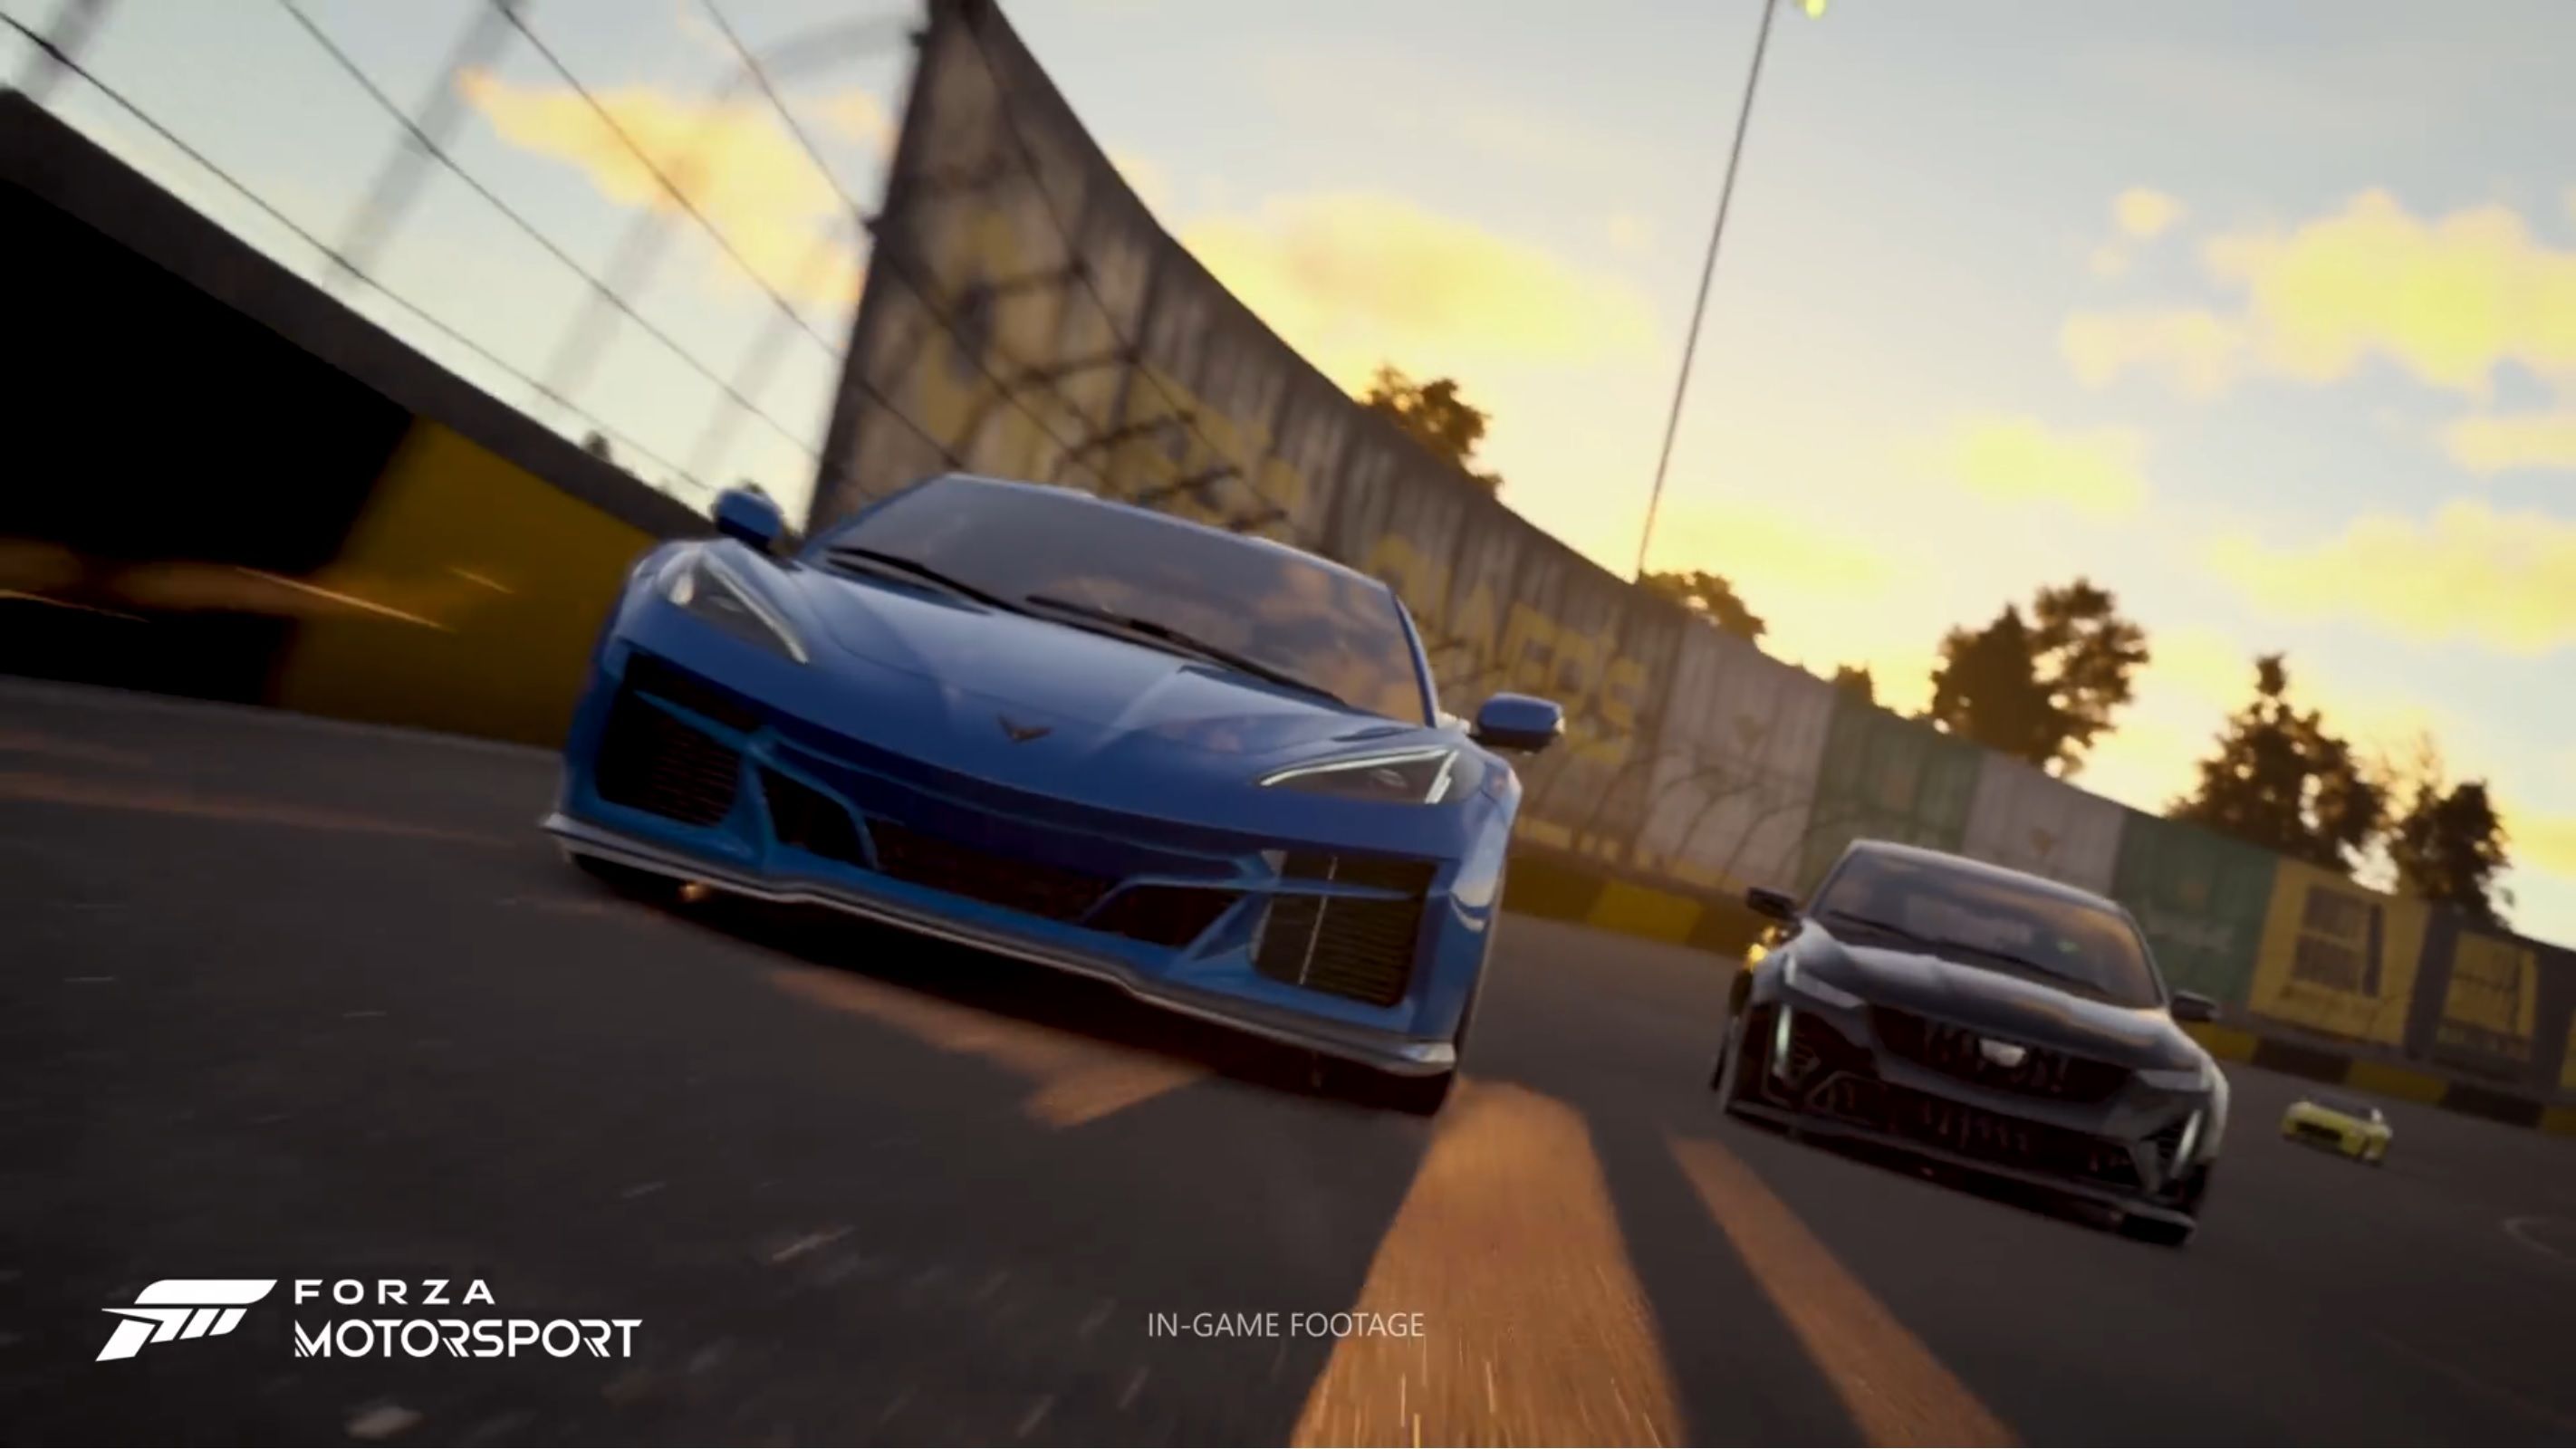  Forza Motorsport 7 – Standard Edition - Xbox One : Microsoft  Corporation: Video Games